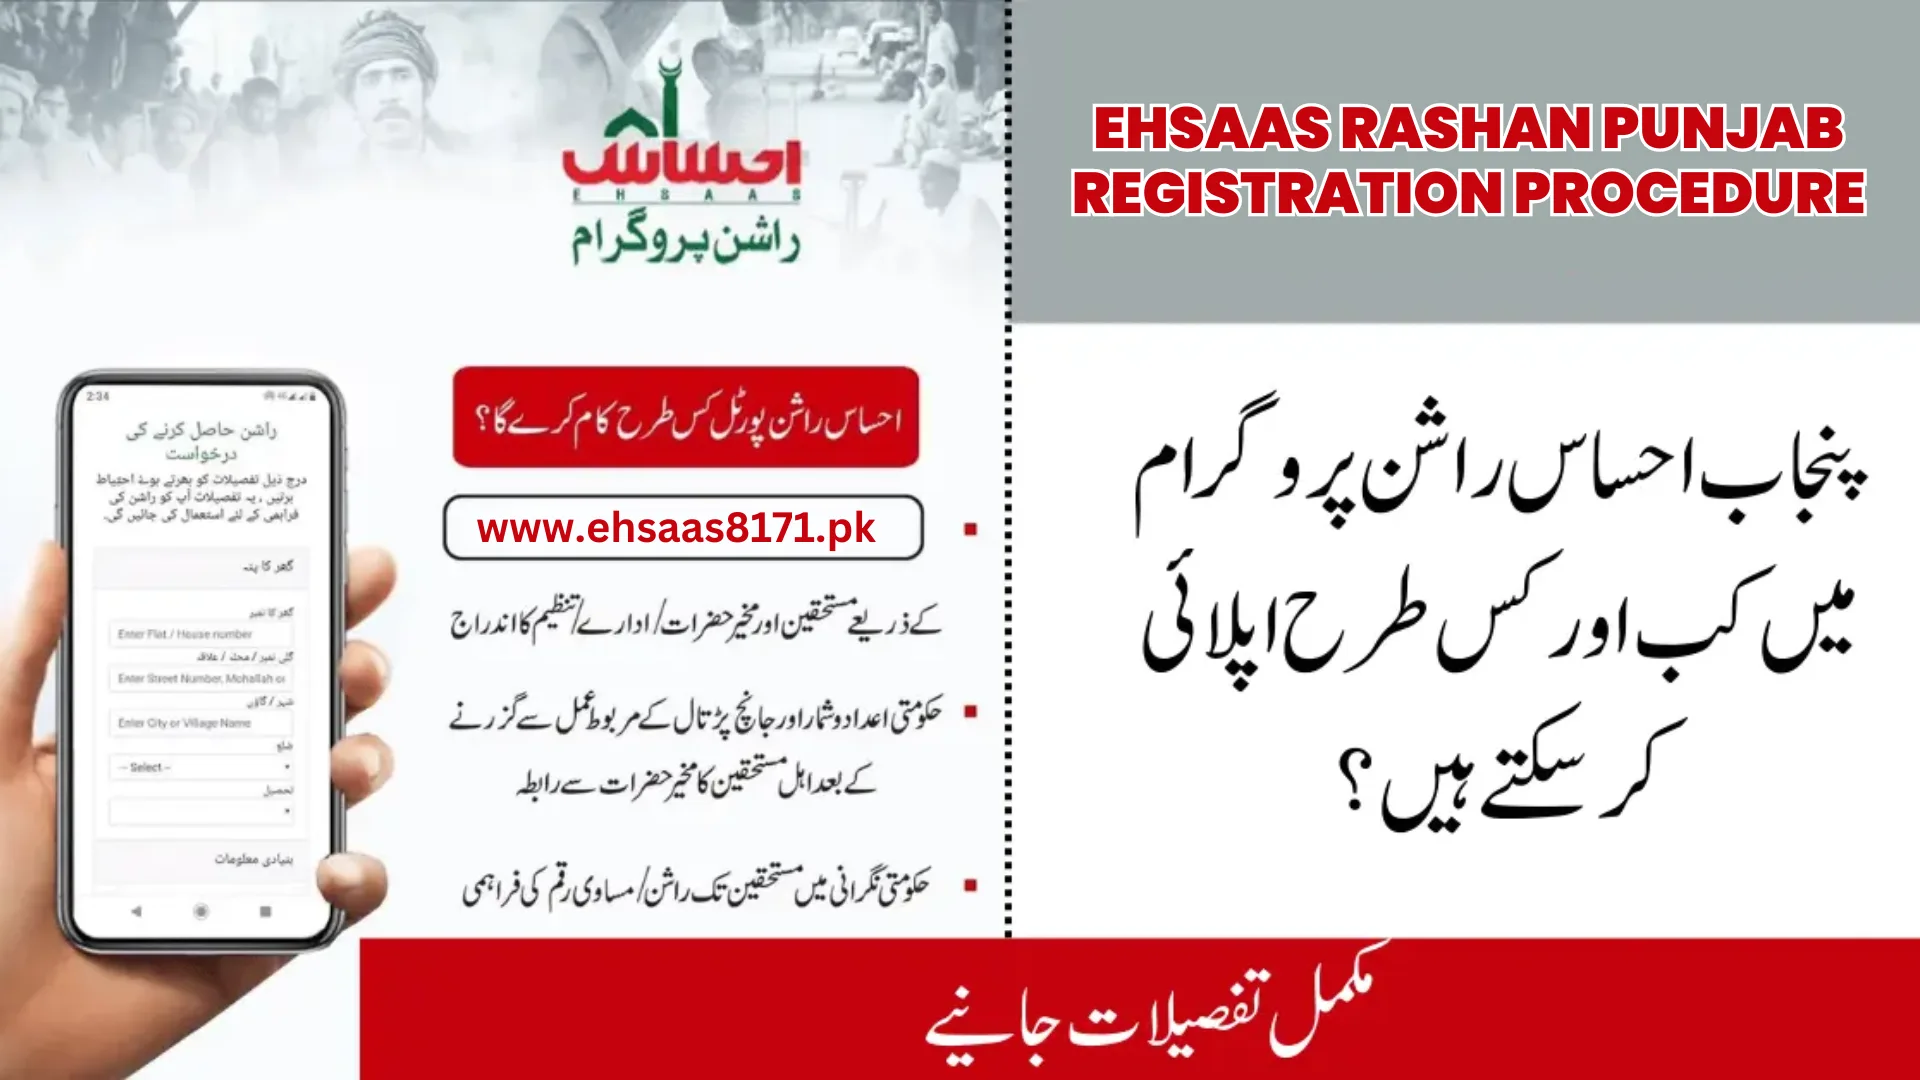 Ehsaas Rashan Punjab Registration Procedure